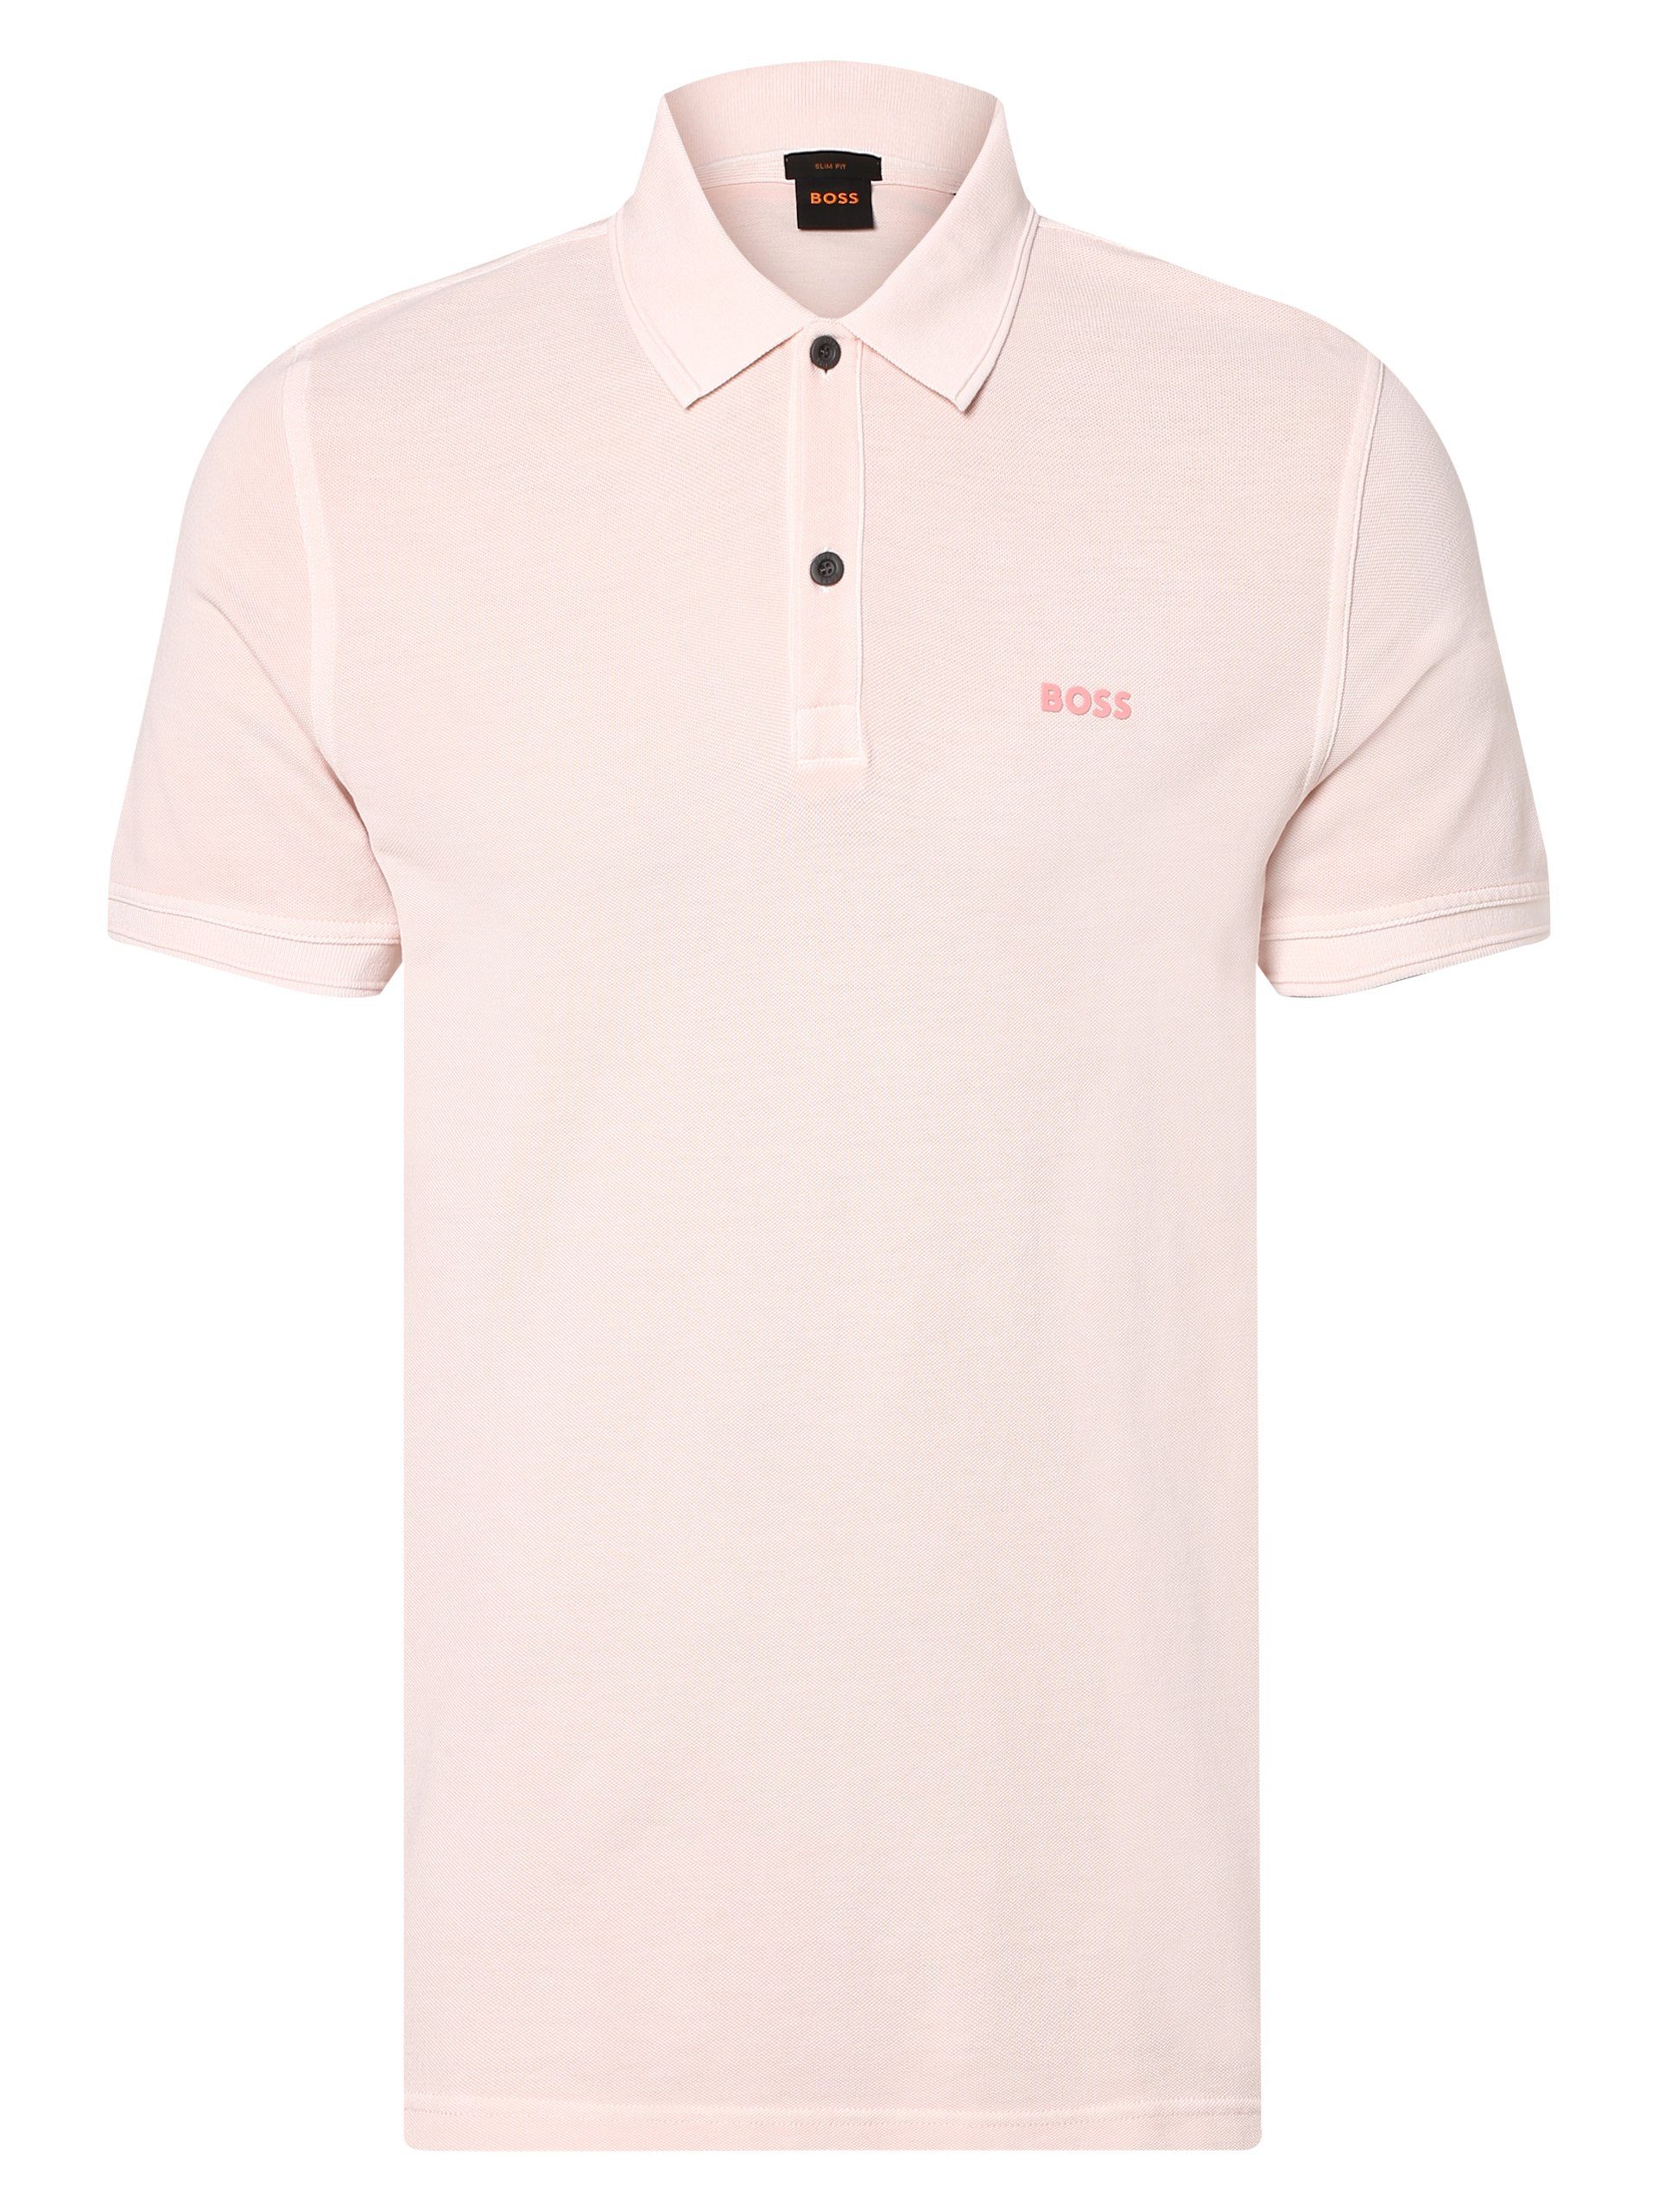 Hohe Qualität und maximale Ersparnis BOSS ORANGE Poloshirt Prime rosa